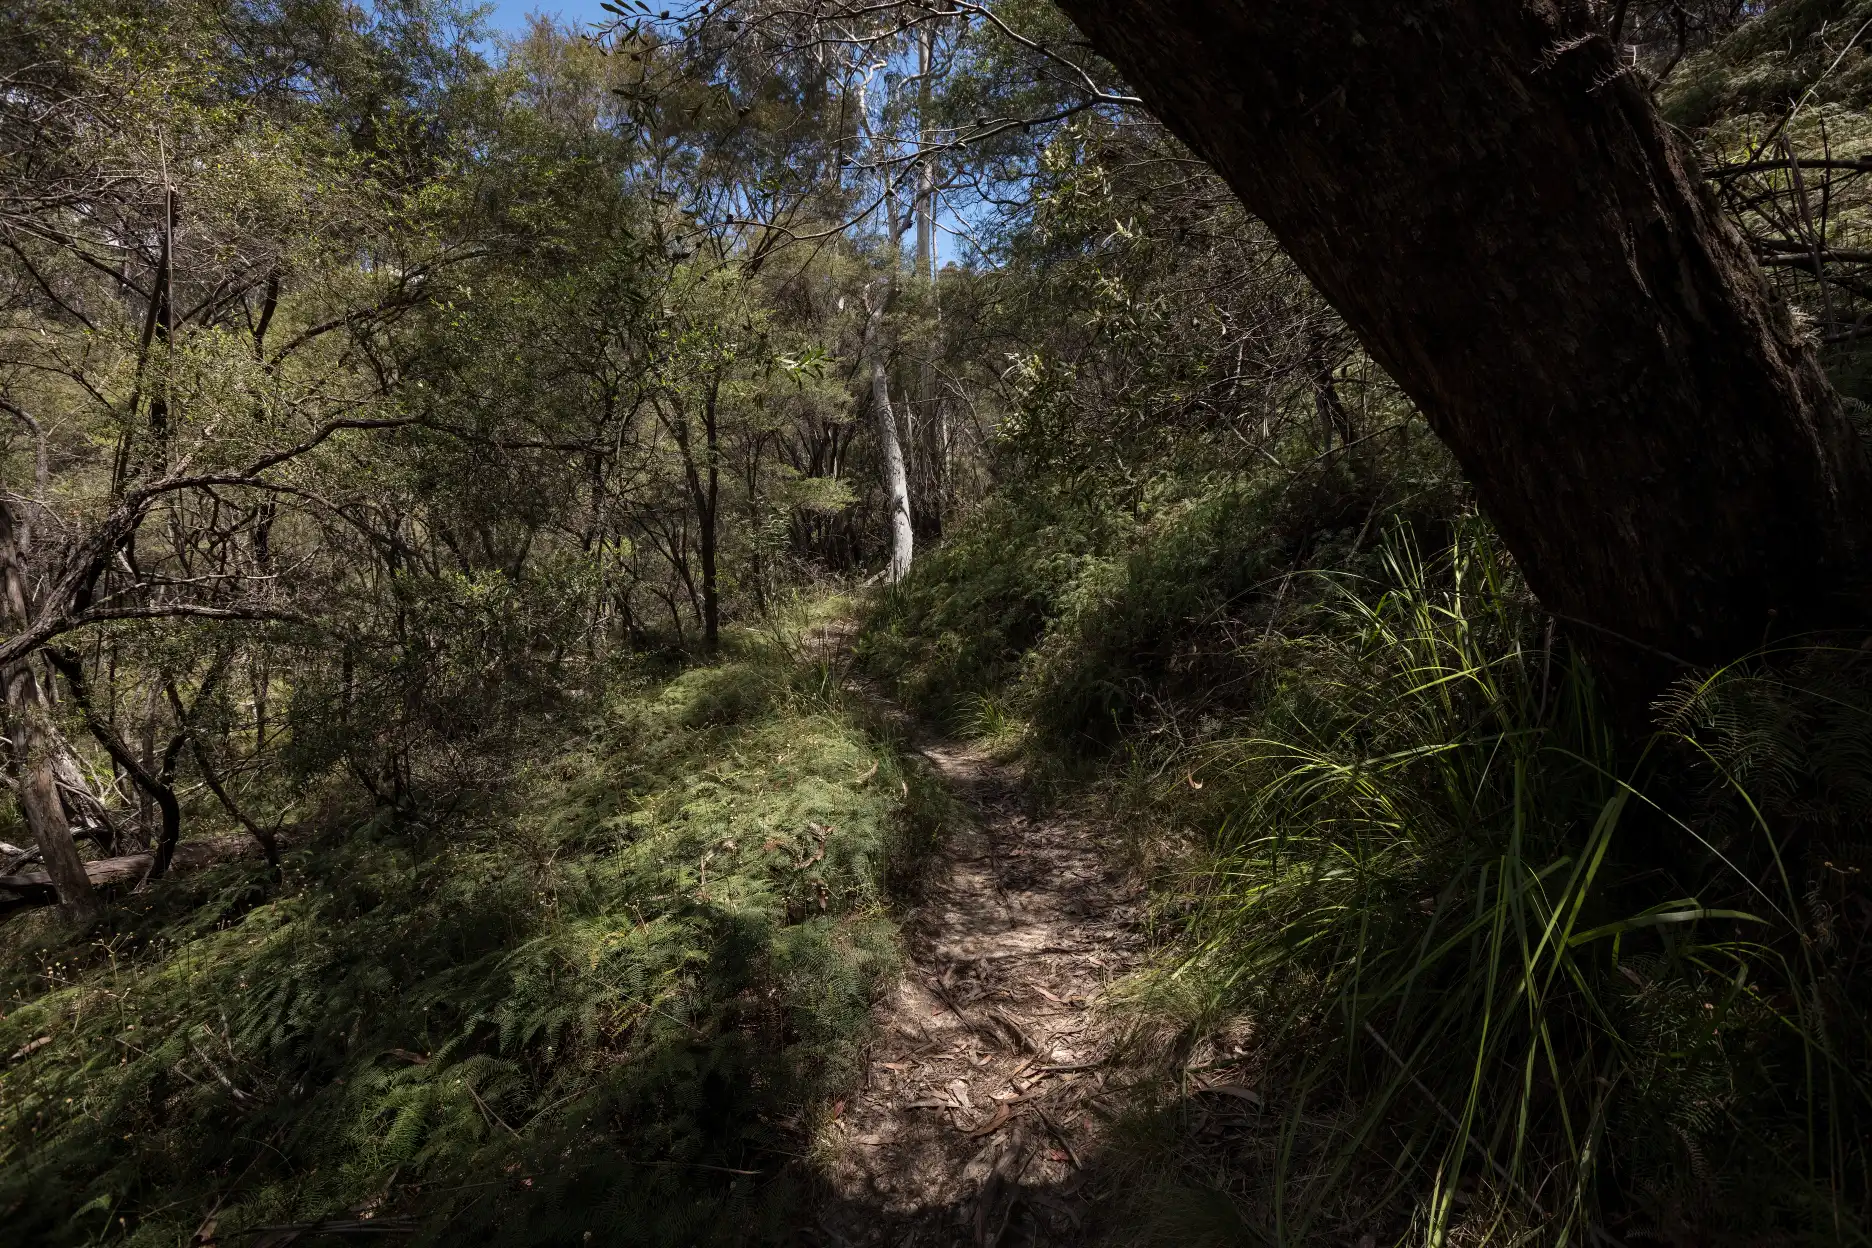 Trail section near Drosera auriculata and Drosera binata well after Horseshoe Falls near Blackheath